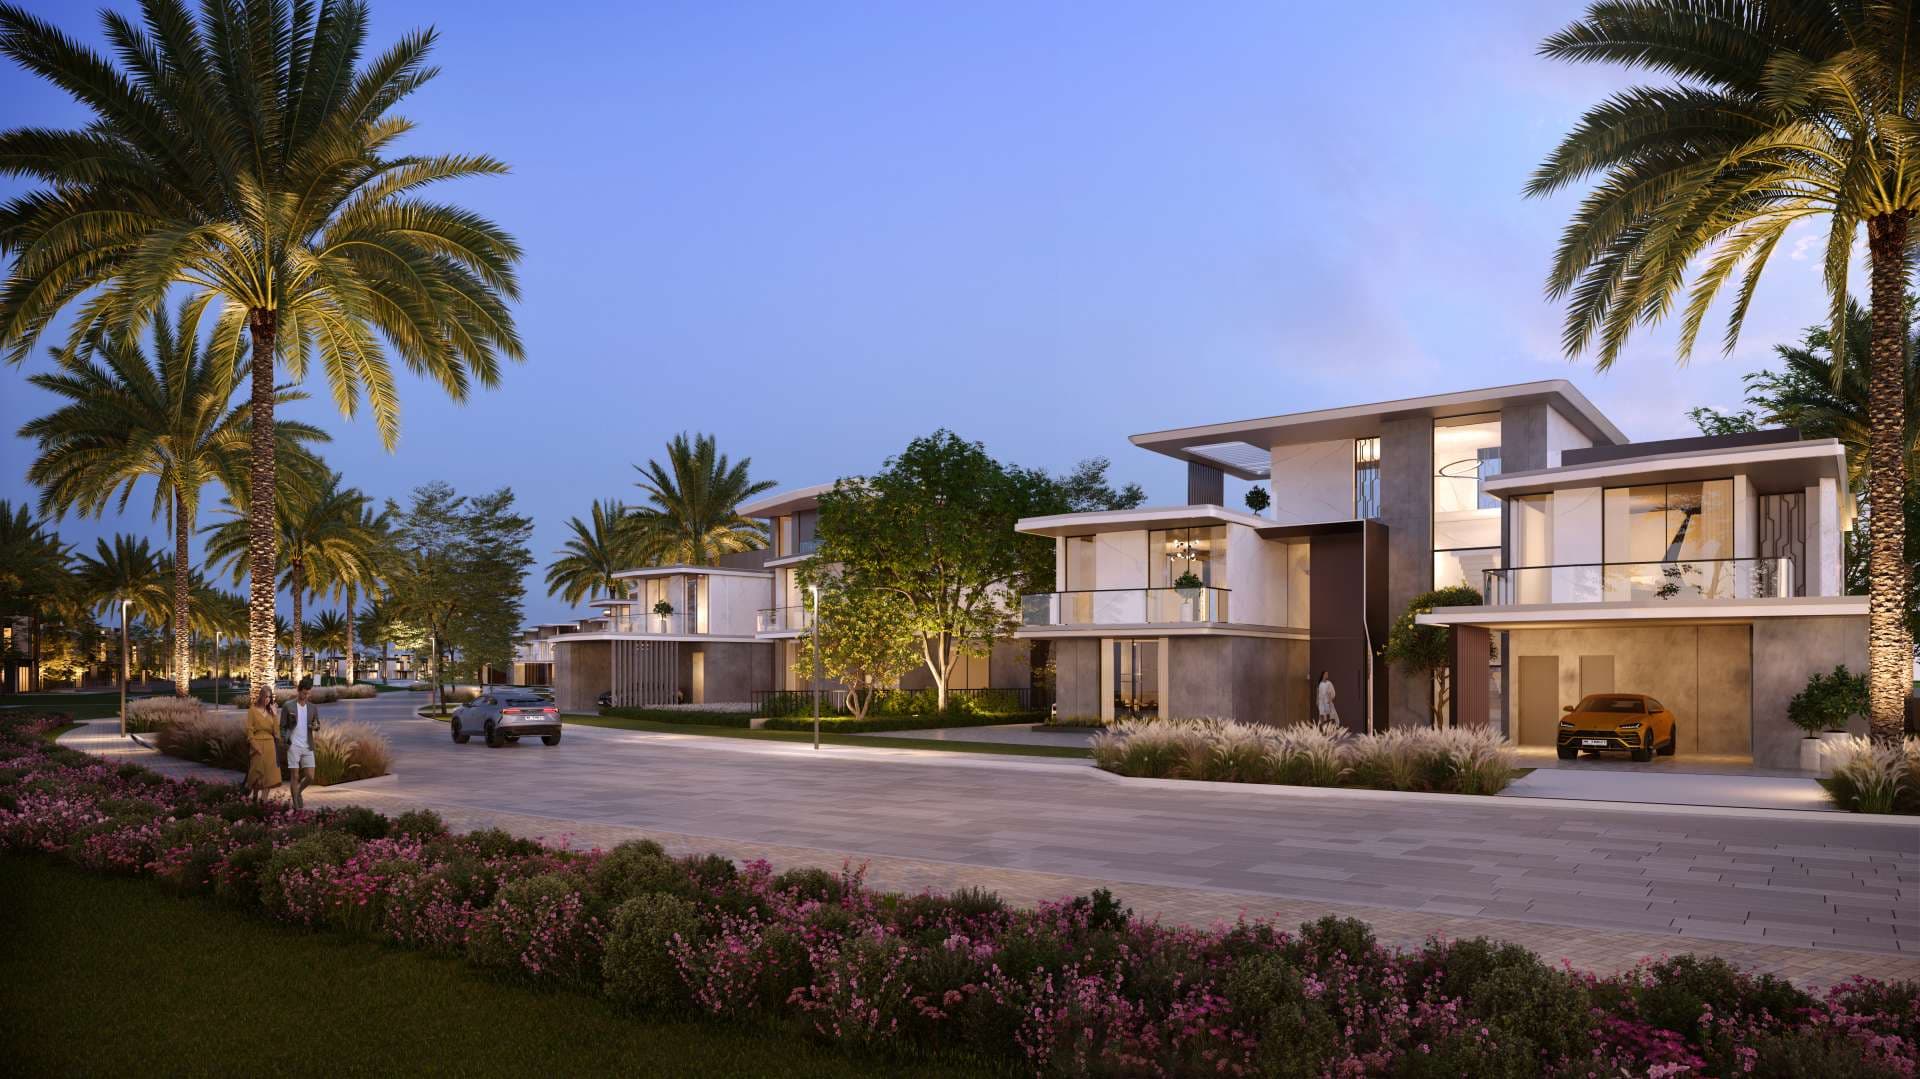 6 Bedroom Villa For Sale Dubai Hills Vista Lp07560 150a59400785f000.jpg